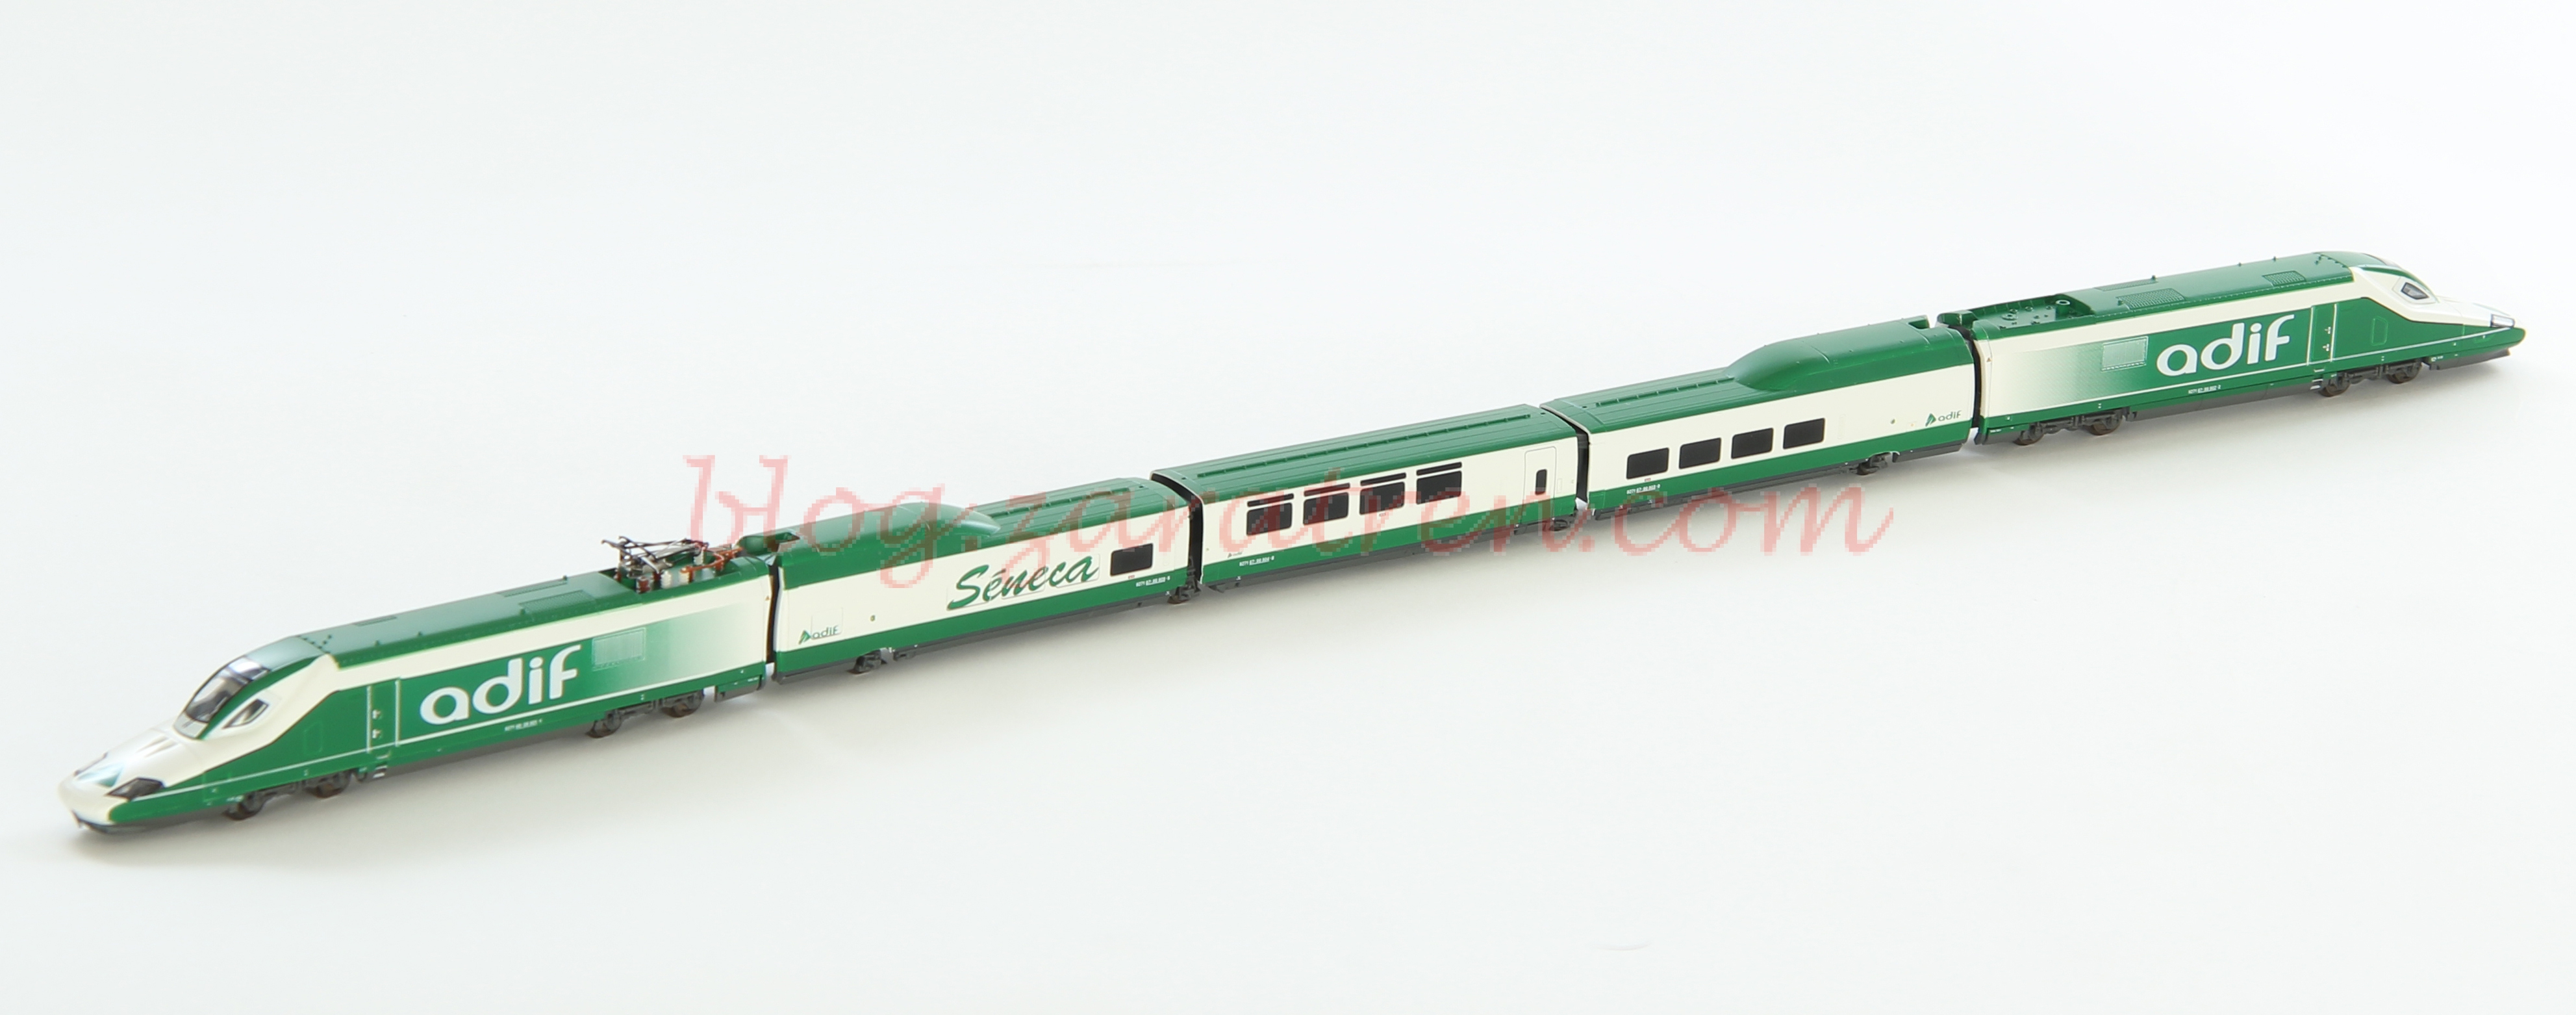 IH – Tren Auscultador Adif A-330, Verde-Blanco, logo Seneca, Serie limitada, Escala N, Ref: IH-T002.